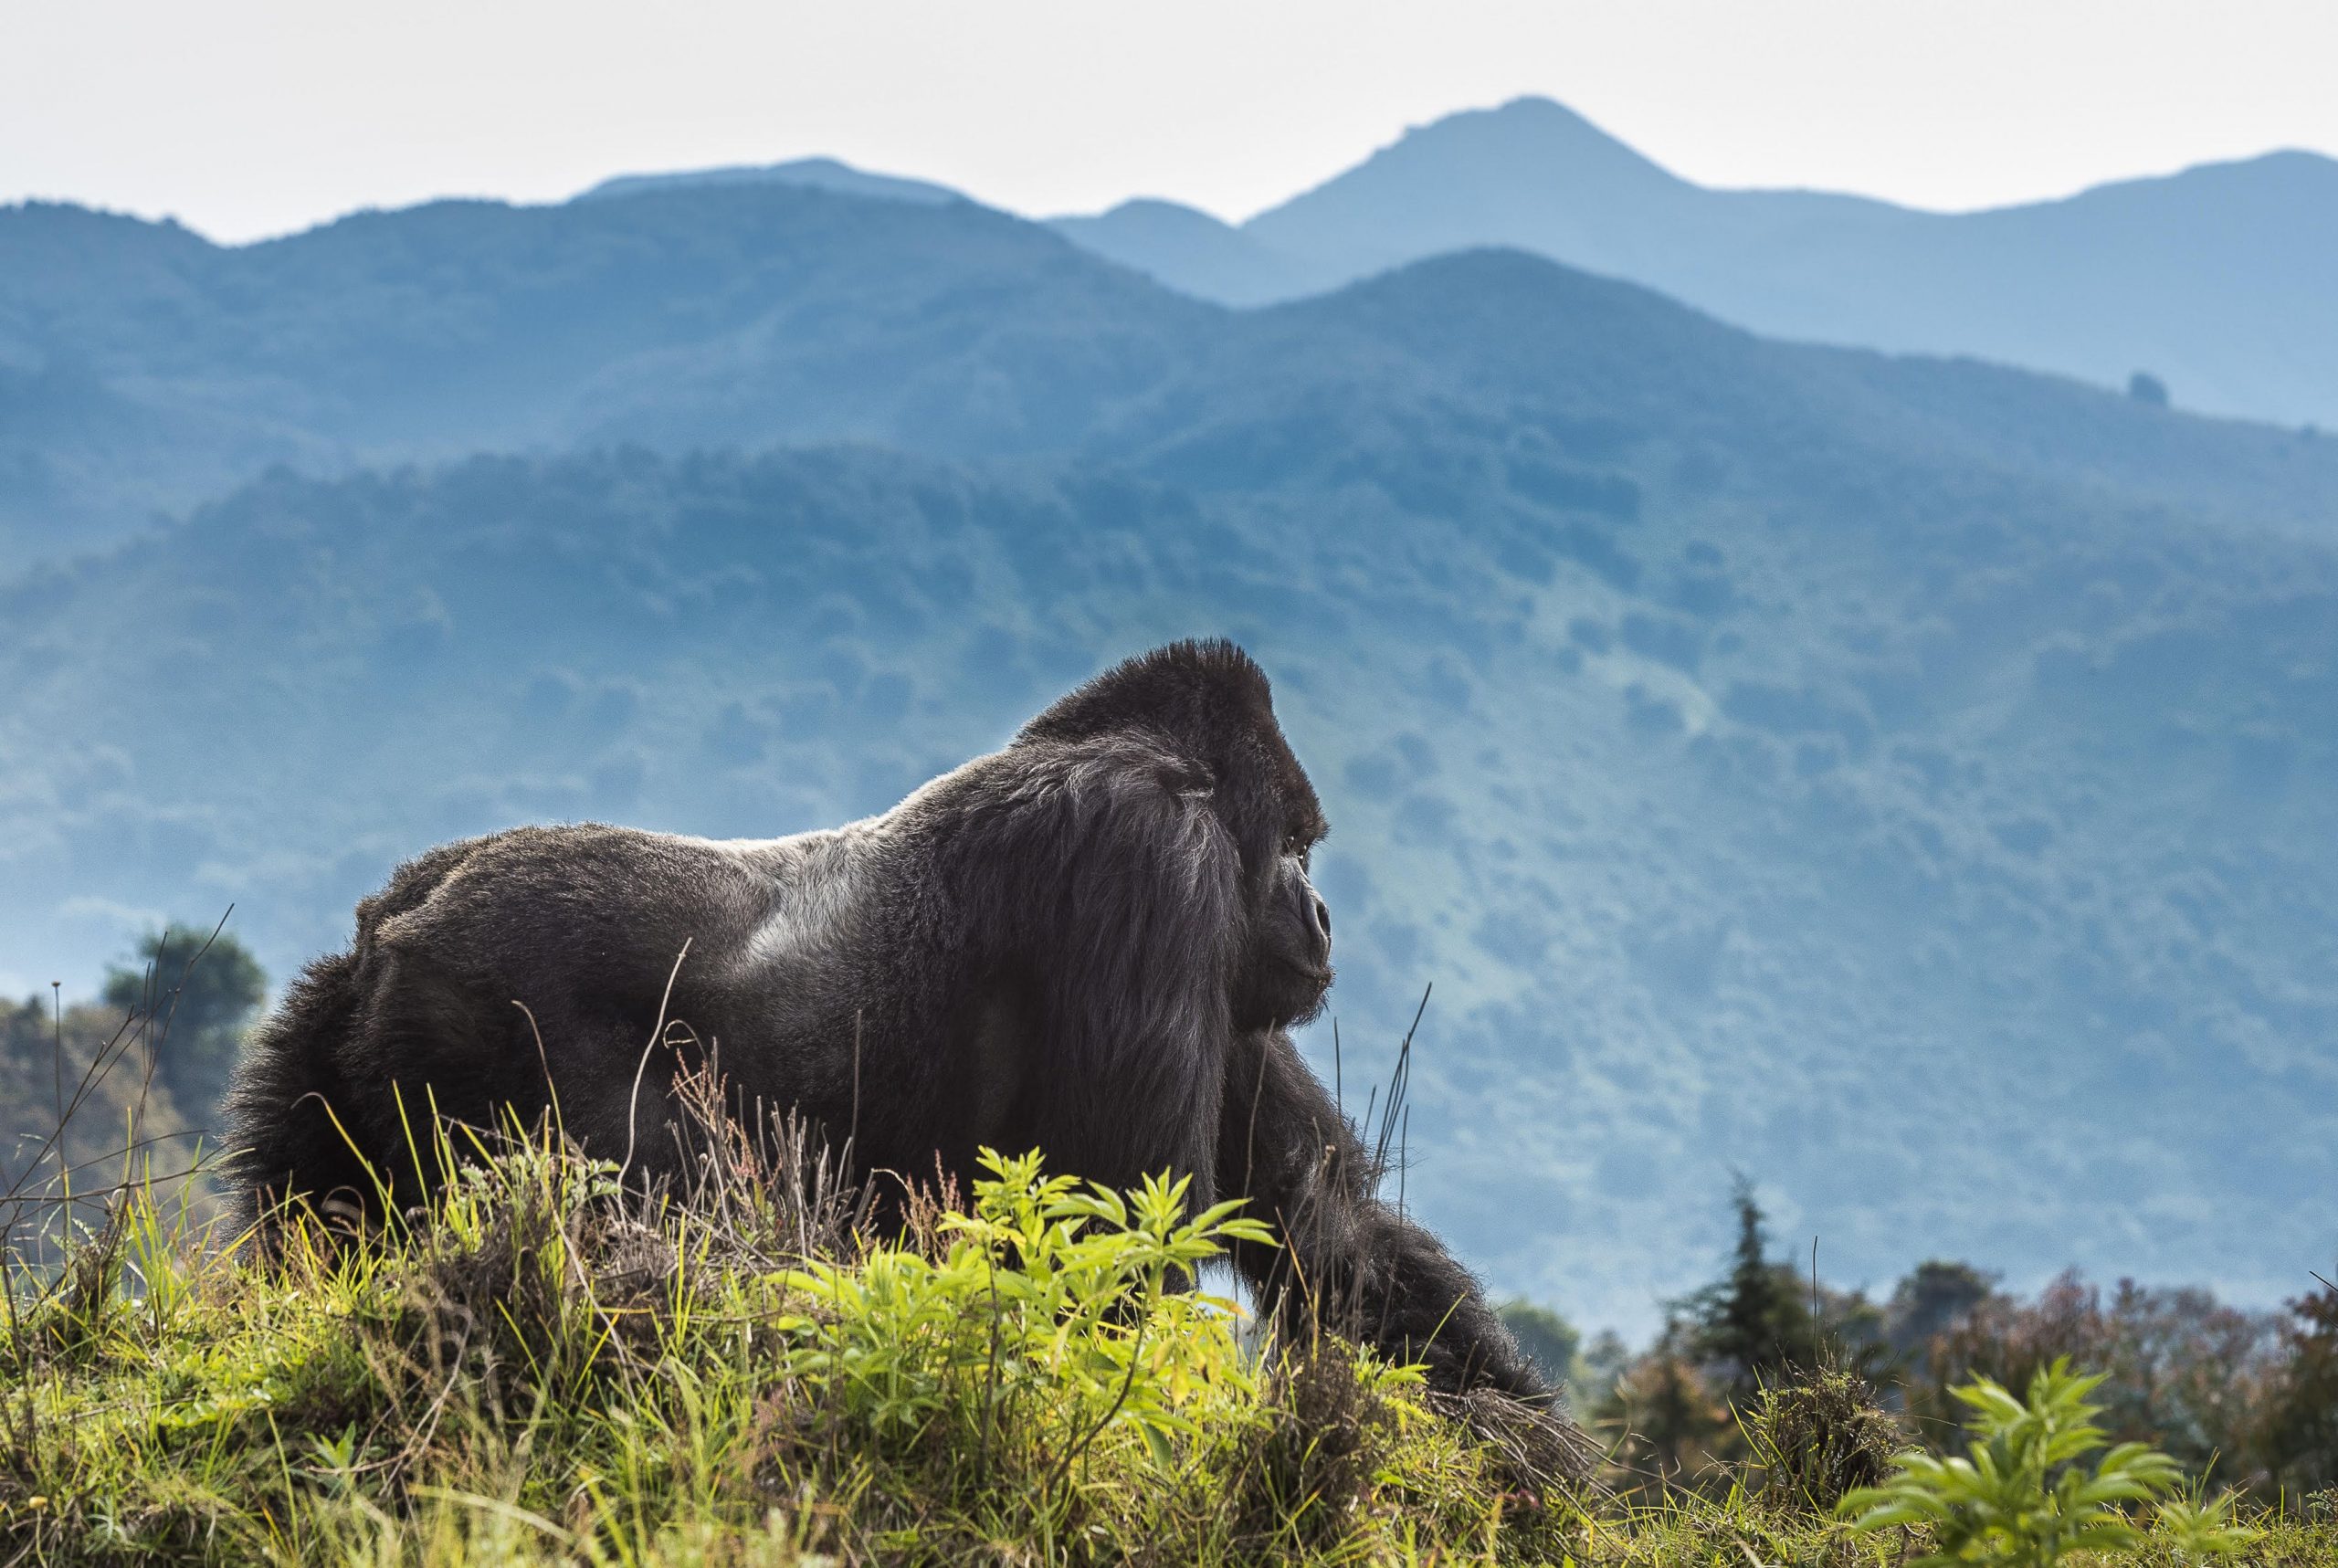 Reasons for Gorilla Trekking in Rwanda